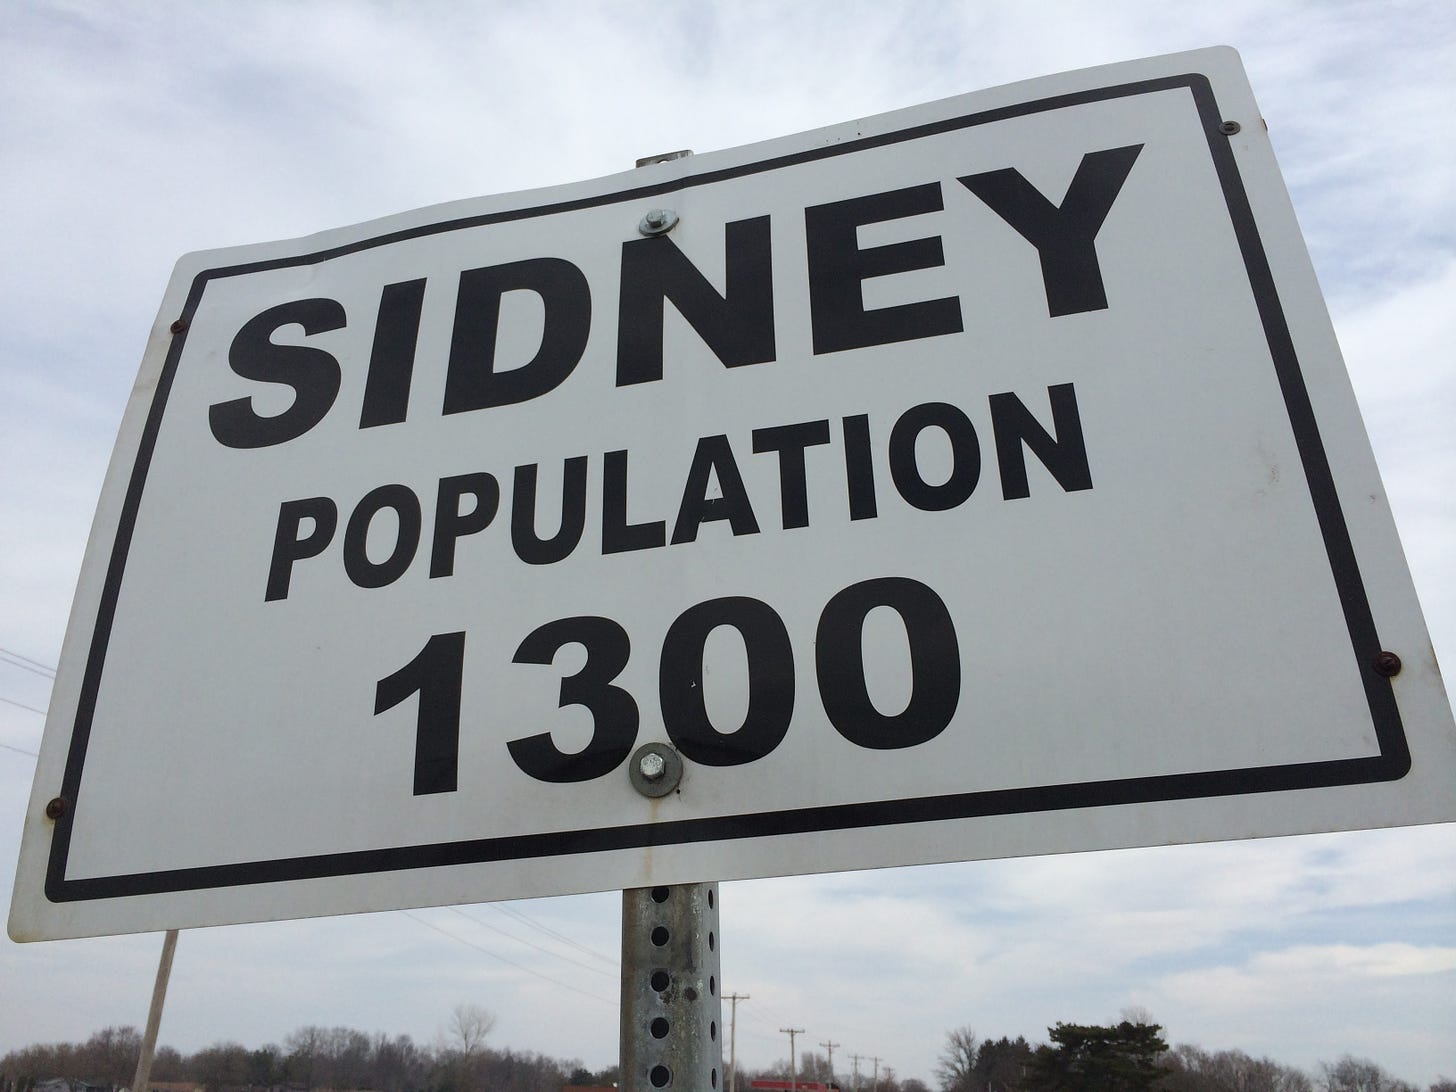 Sidney, population 1300